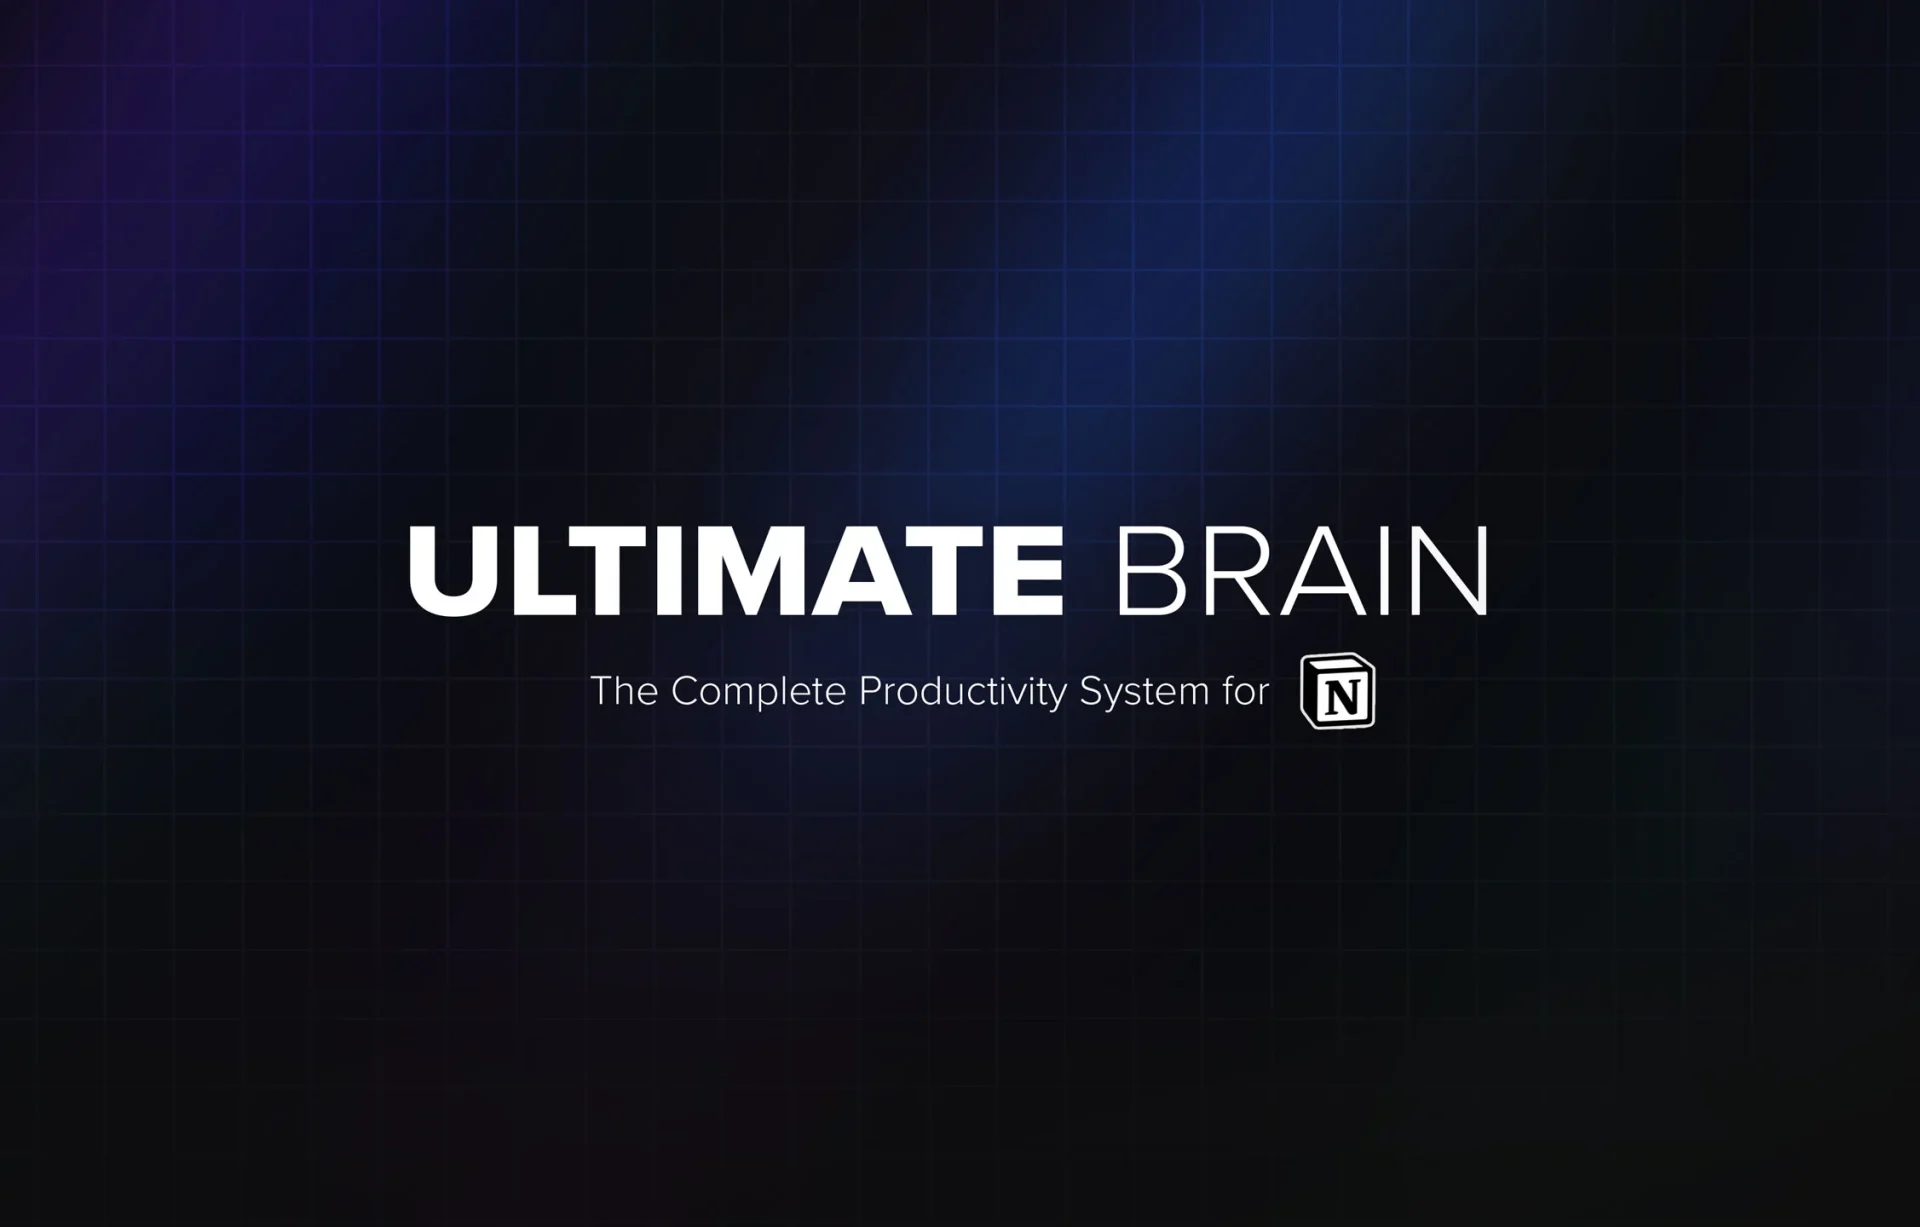 Ultimate Brain in Notion